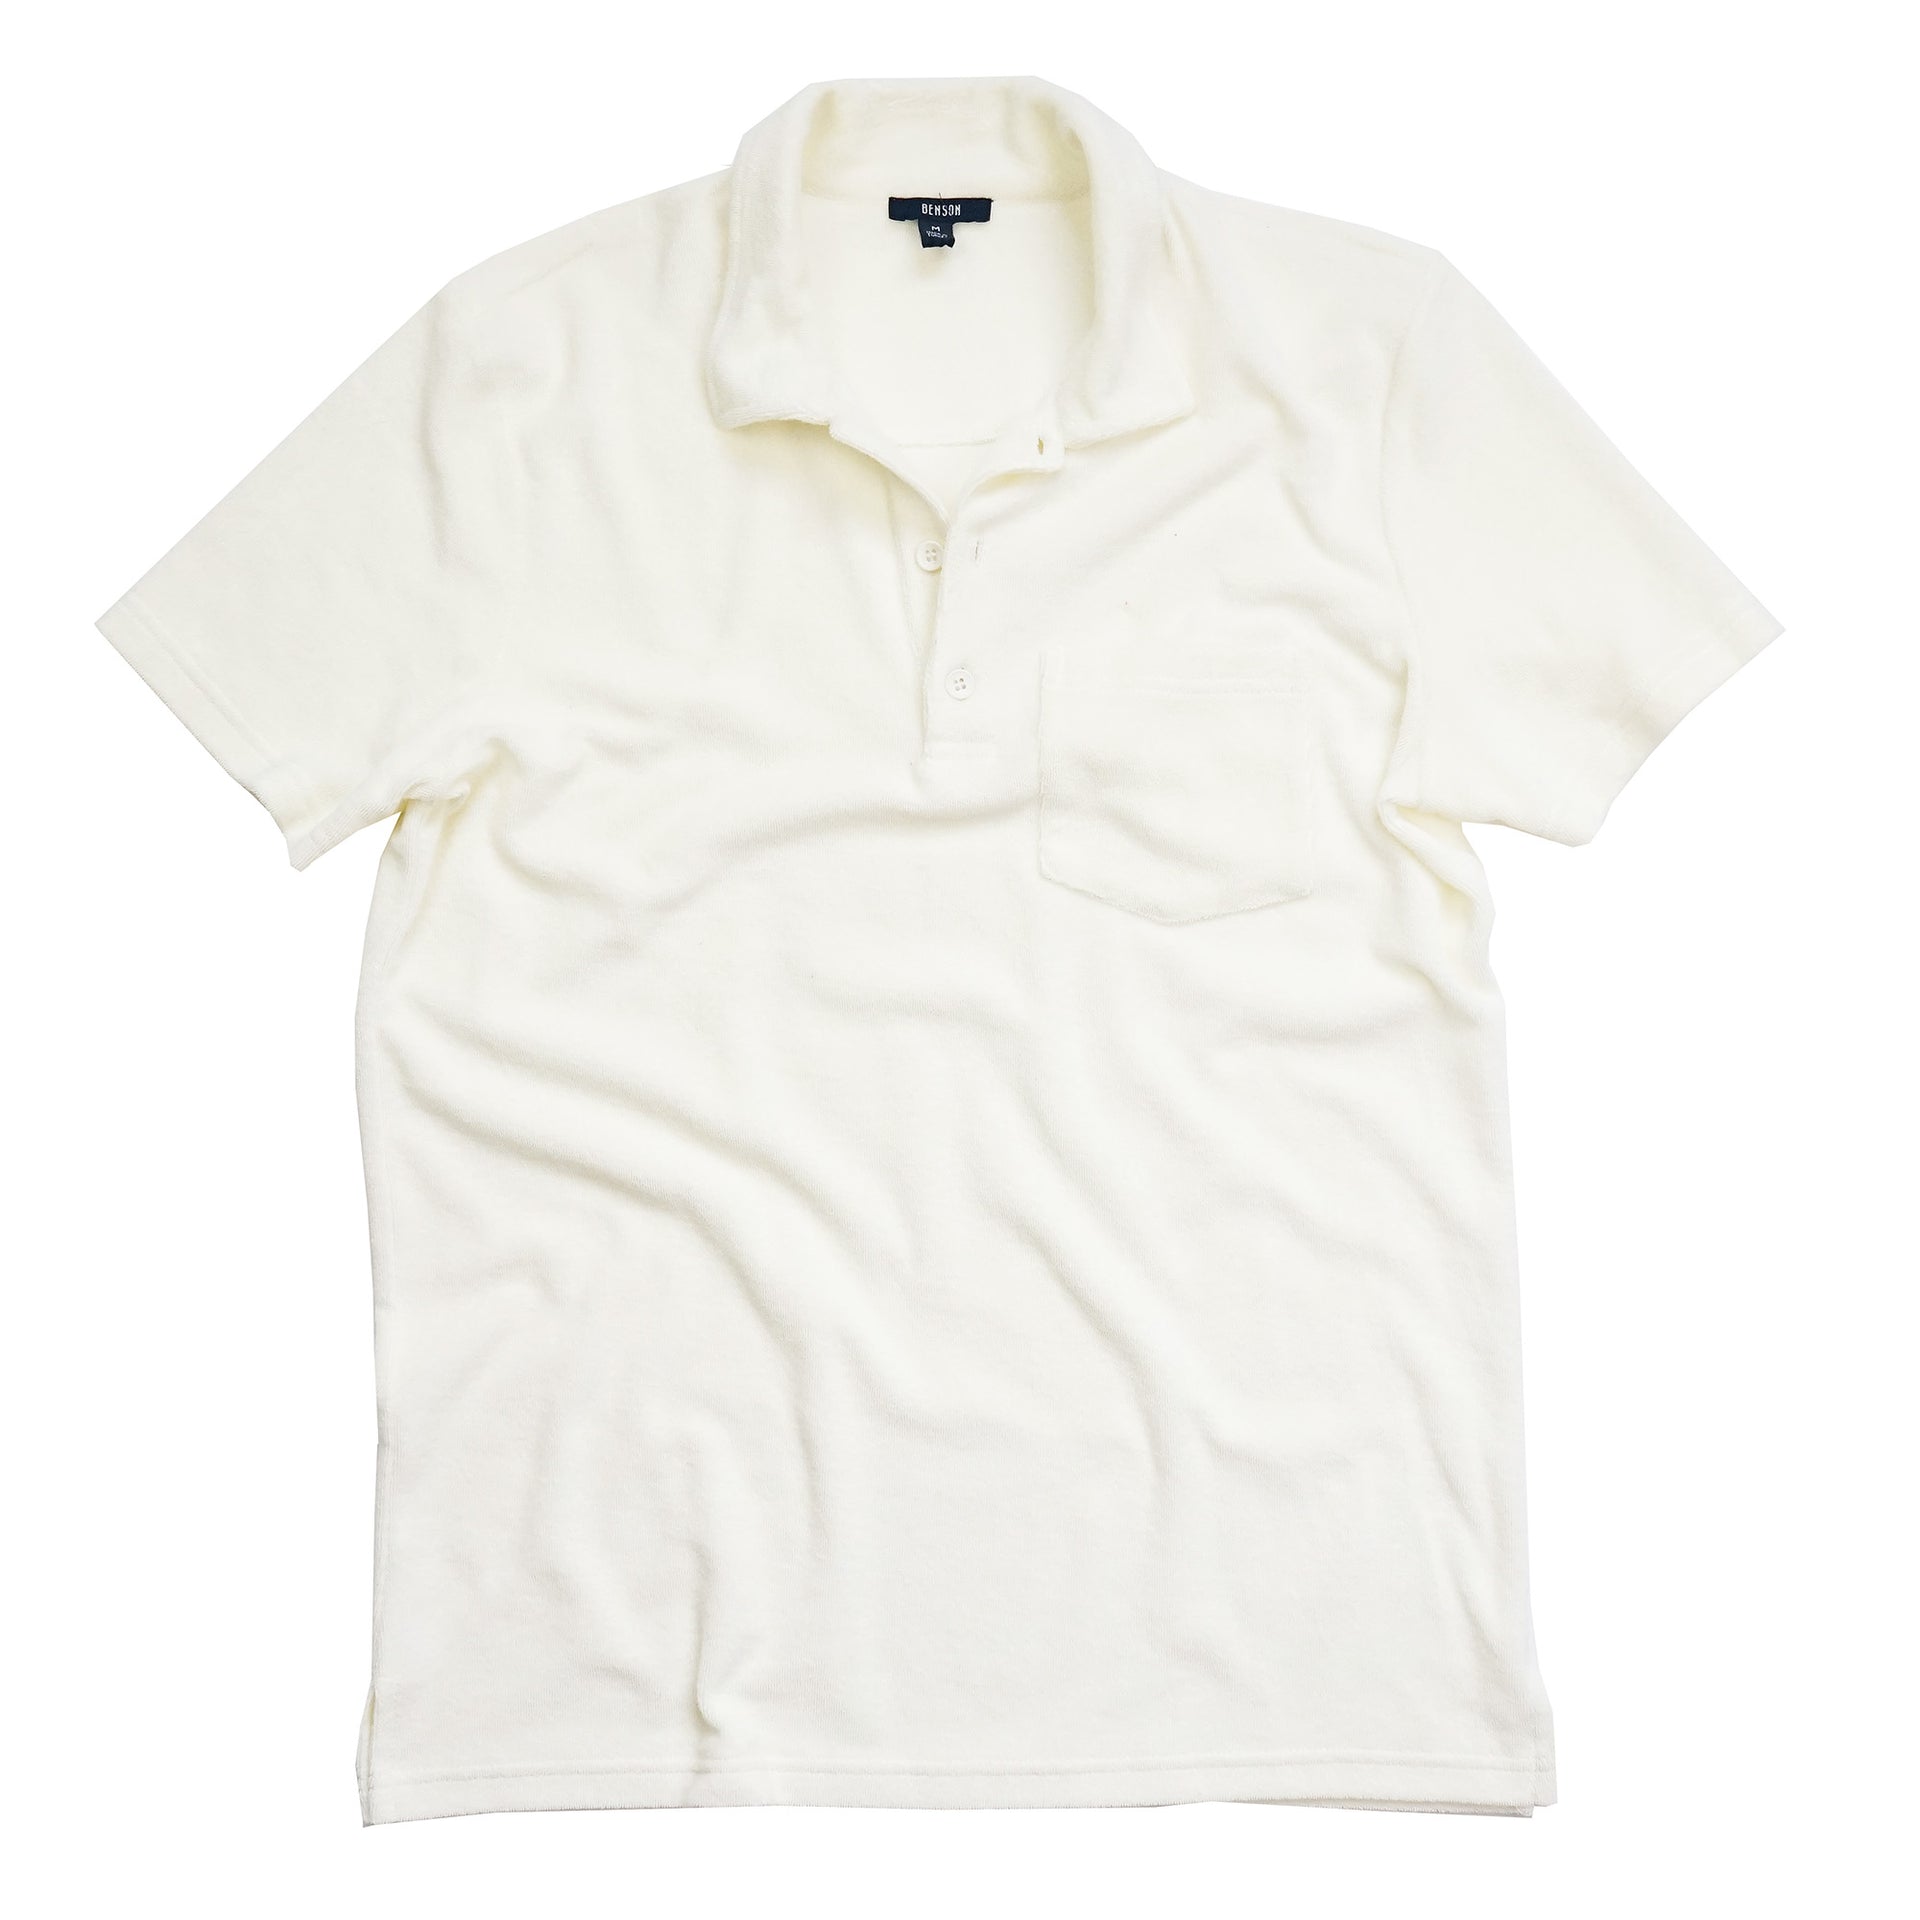 Men's Terry Cloth Shirt in Cream